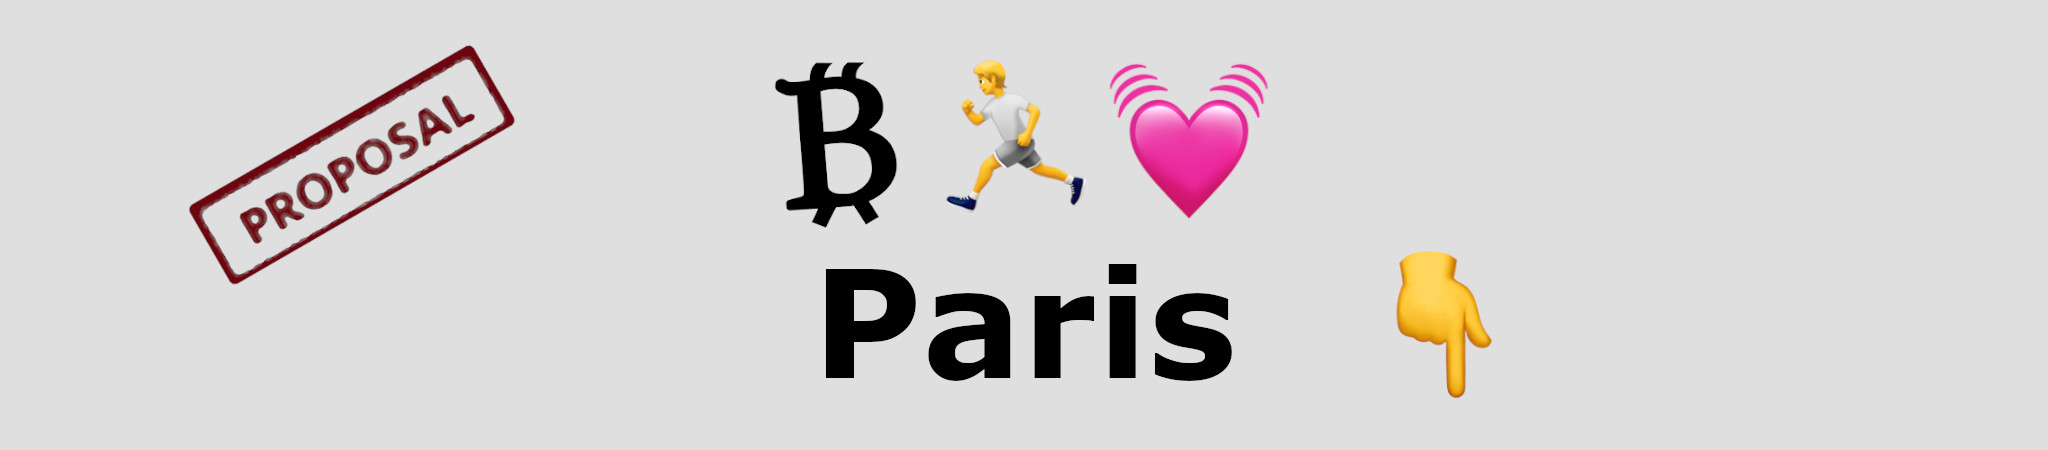 Paris Bitcoin Run Request ₿ 🏃‍♂️ 🇫🇷